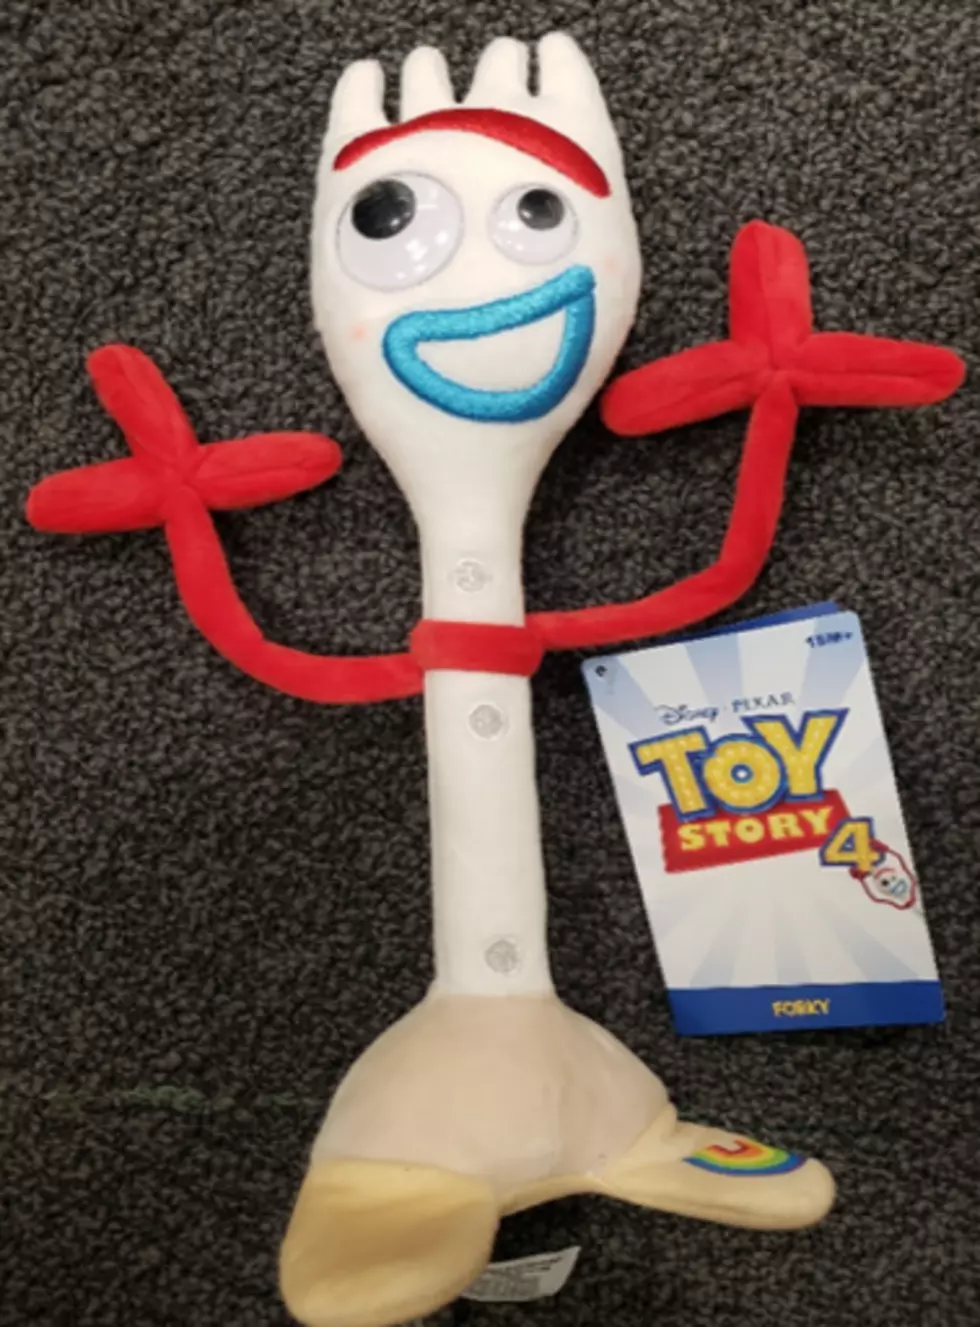 ‘Toy Story 4′ Plush Toy Recalled By Disney Due To Choking Hazard